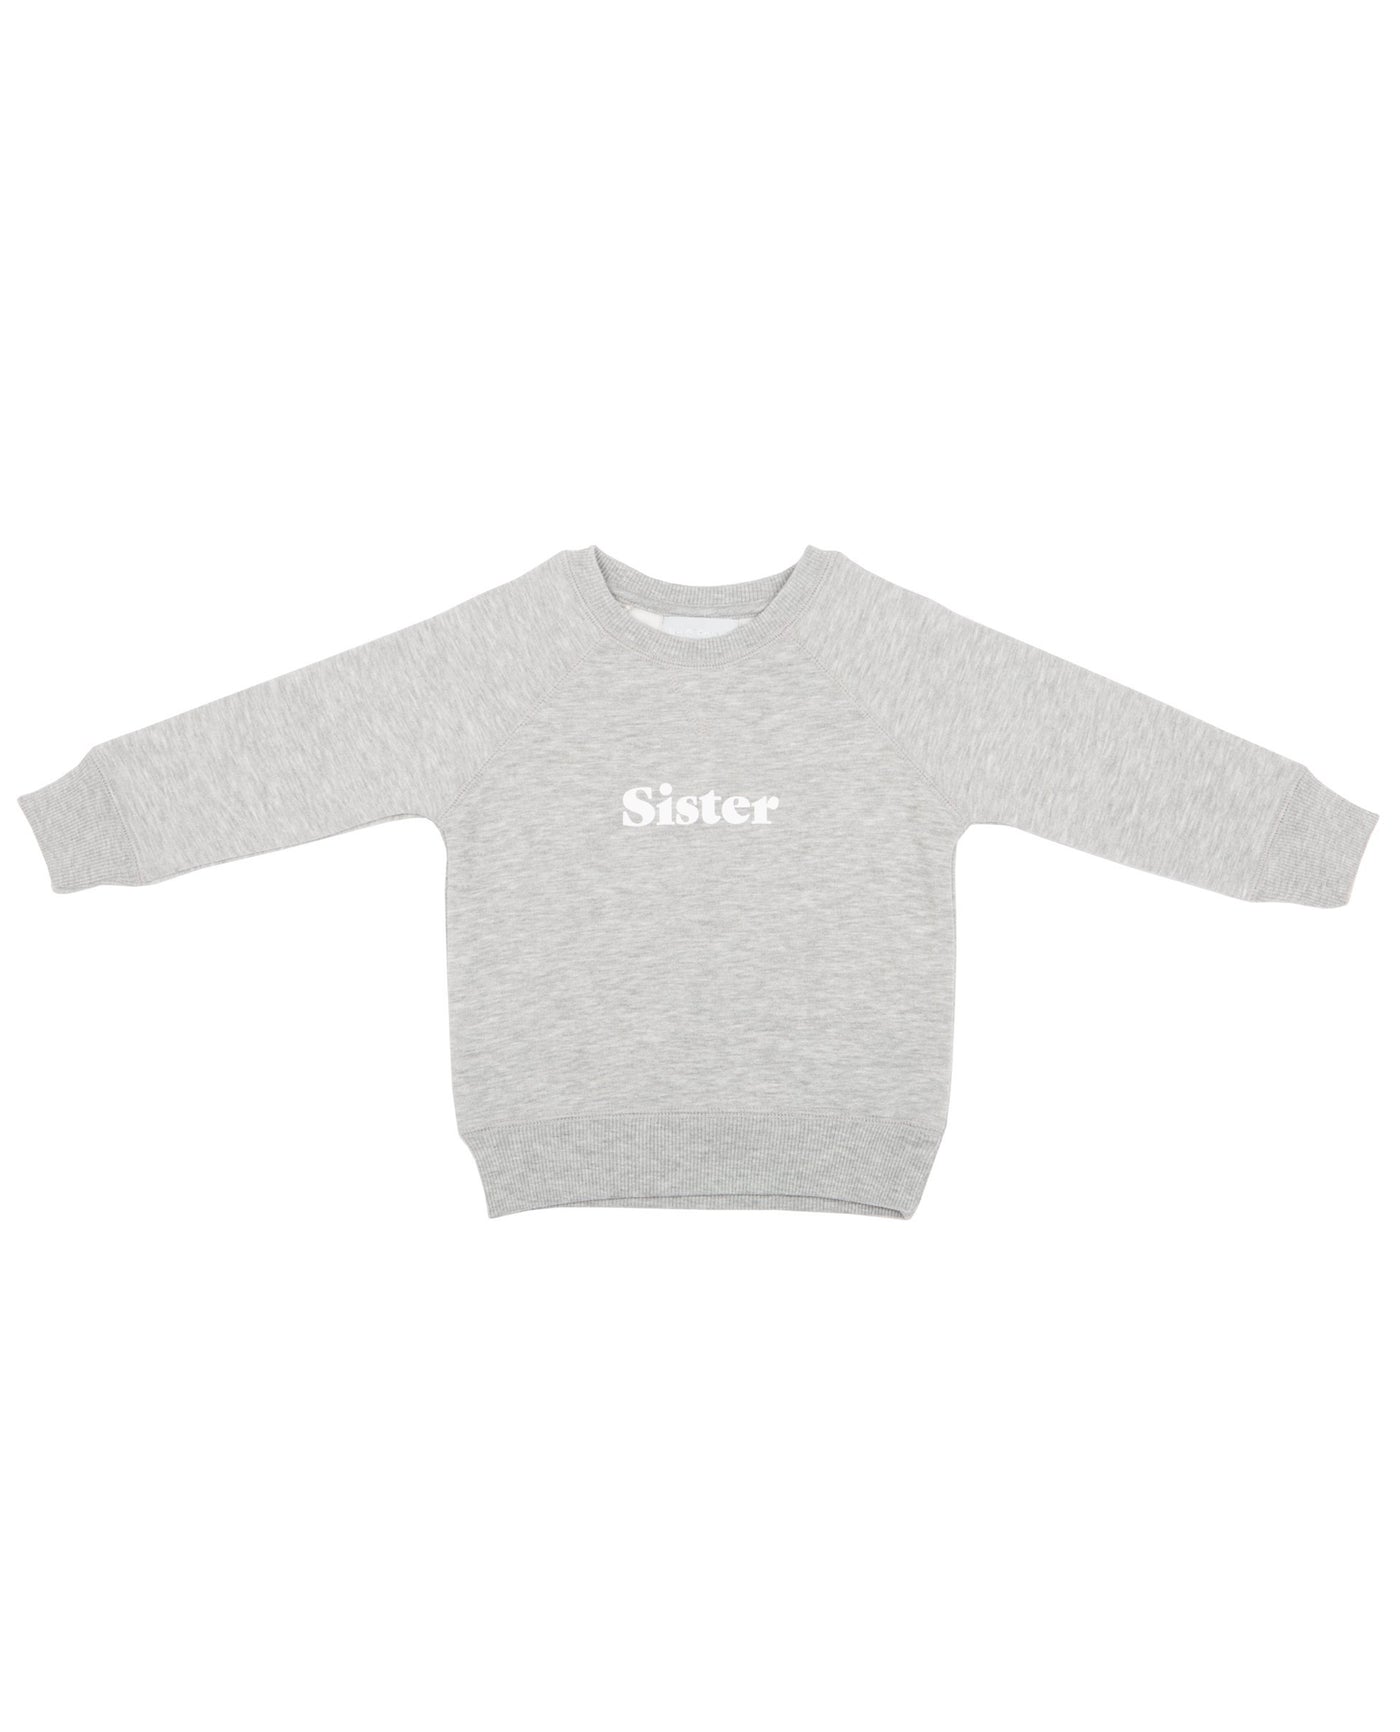 Bob and Blossom Marl Grey Sister Sweatshirt